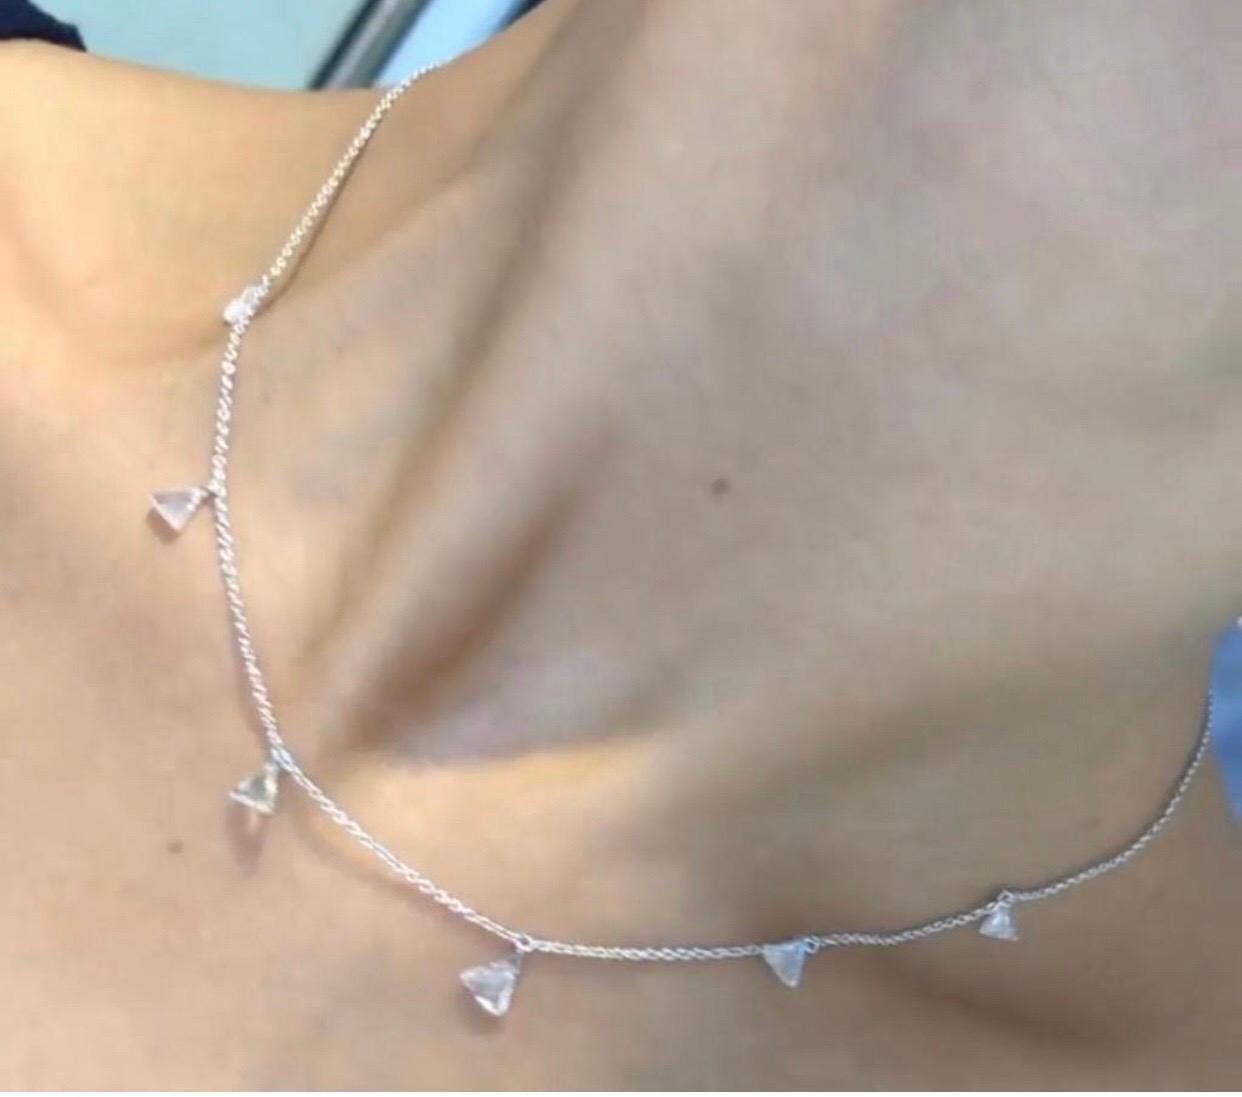 PANIM 18K Diamond Taviz 18K White Gold Choker Necklace

A chic and elegant 16